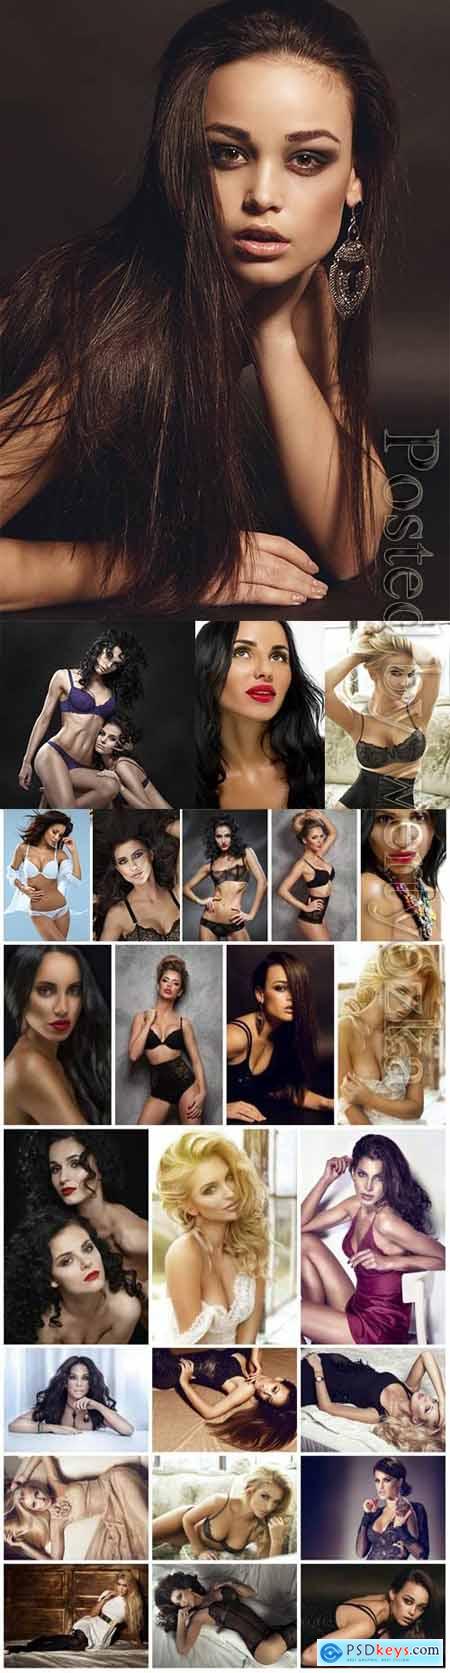 Luxury women in lingerie posing stock photo vol 21